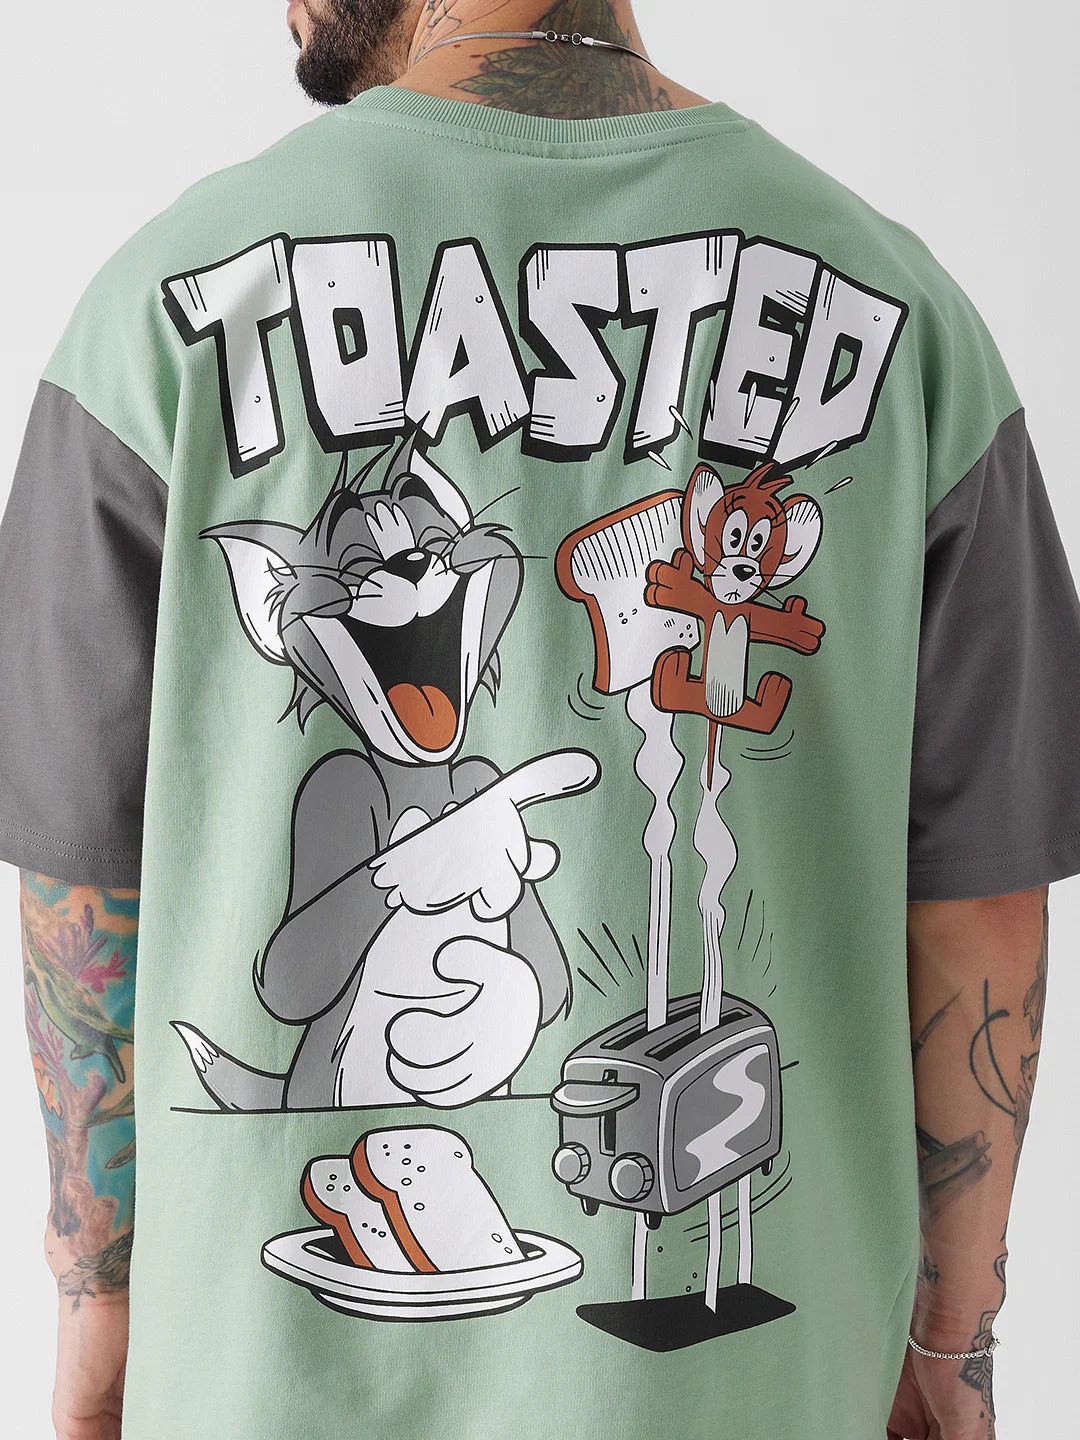 Tom &amp; Jerry Toasted (UK version)